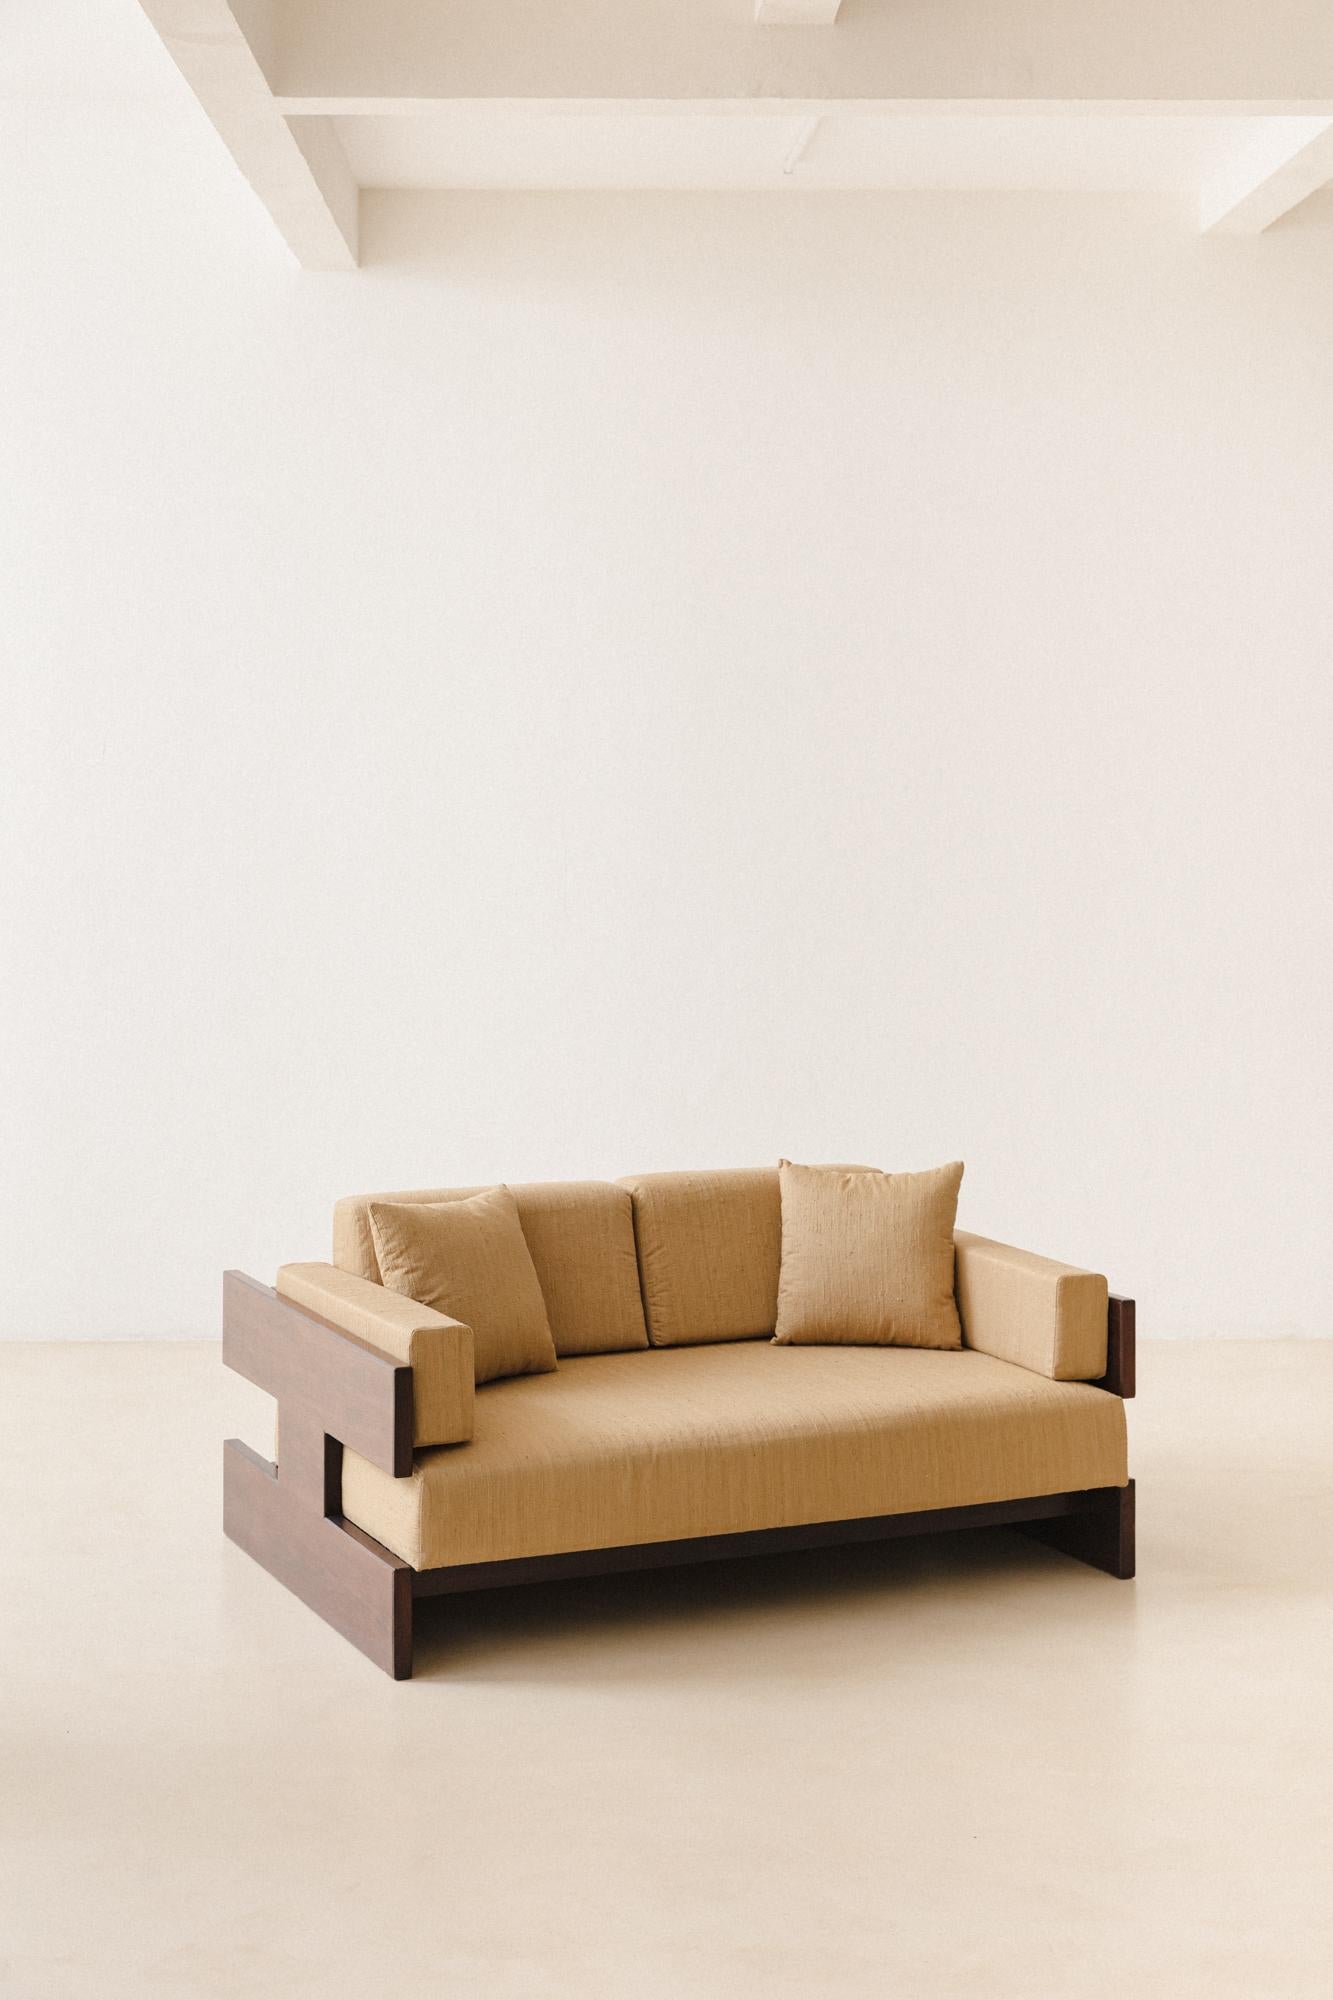 1960s living room furniture